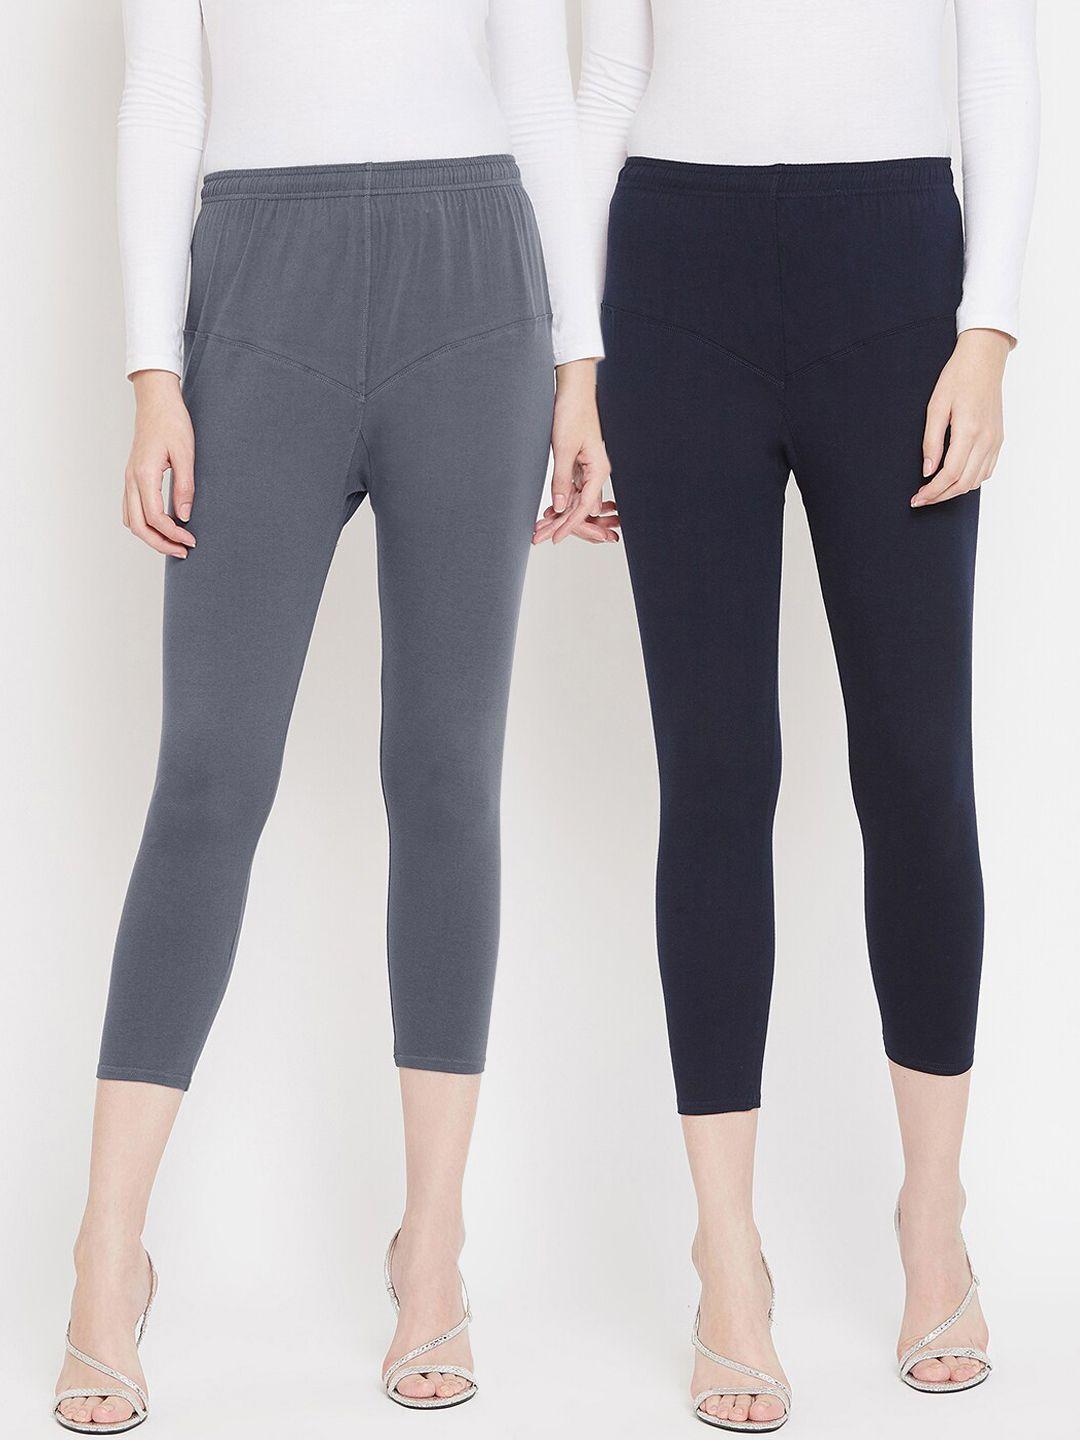 tulsattva women pack of 2 grey & navy blue solid three-fourth length leggings